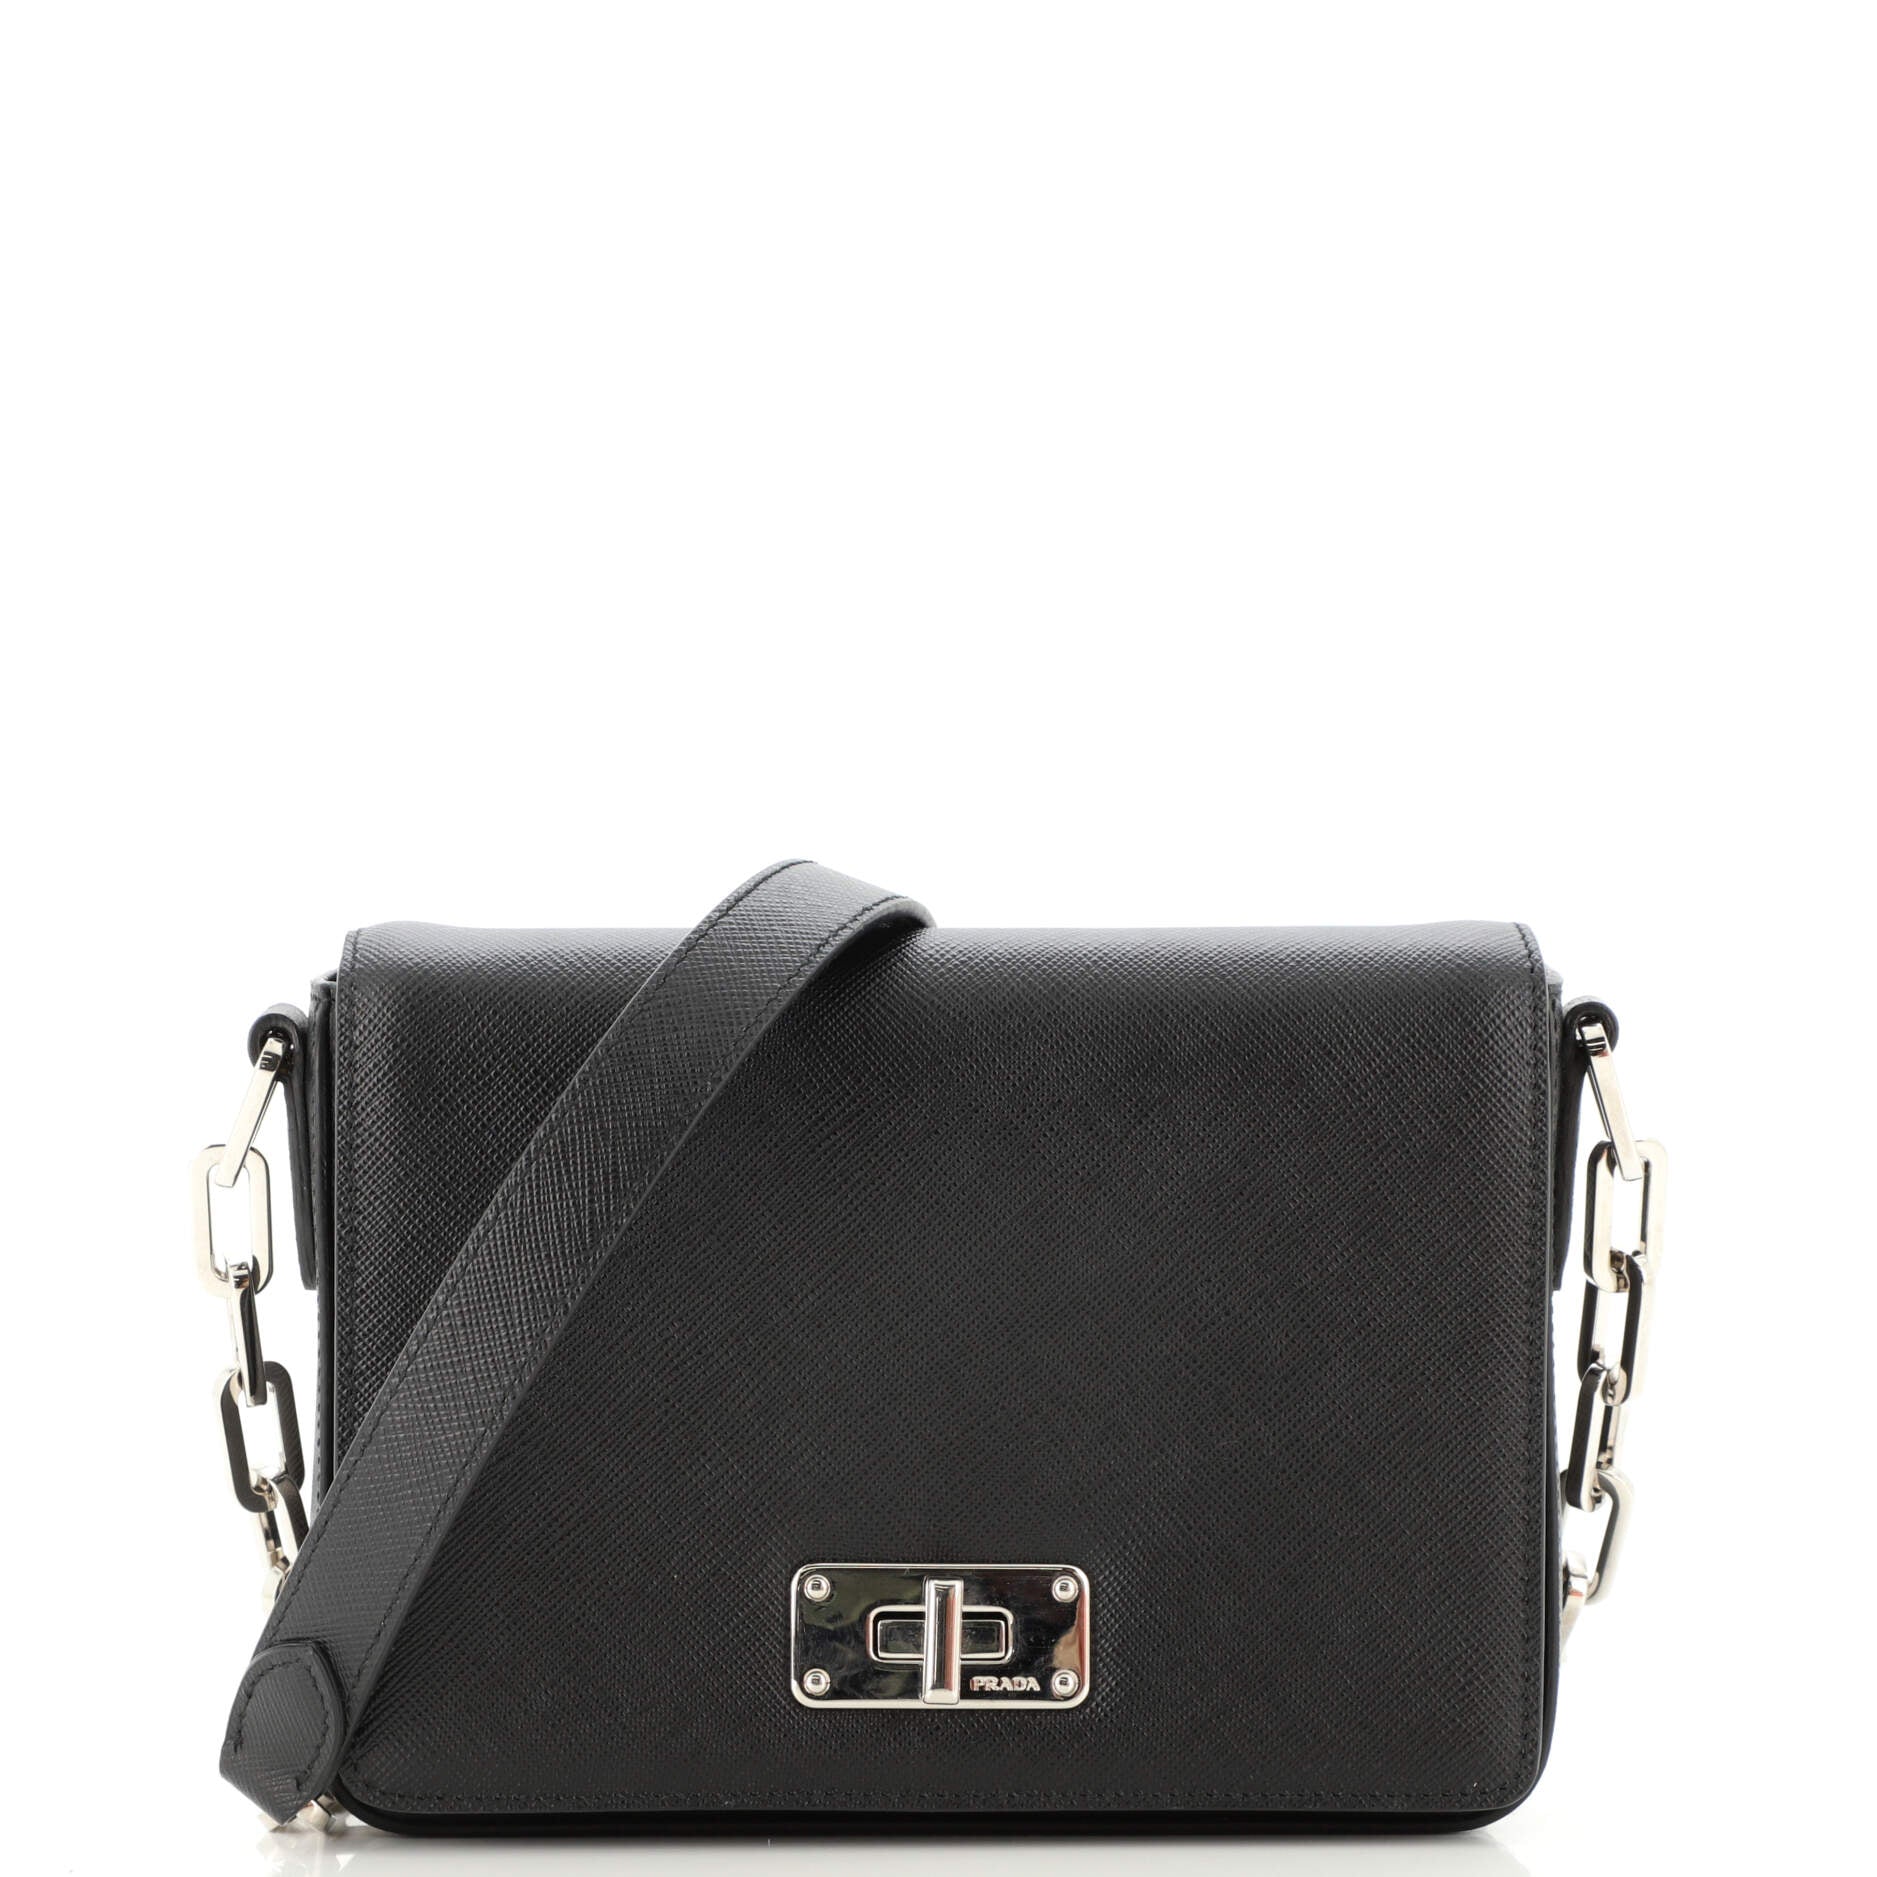 Buy Prada Saffiano Leather Mini Bag - Pink At 23% Off